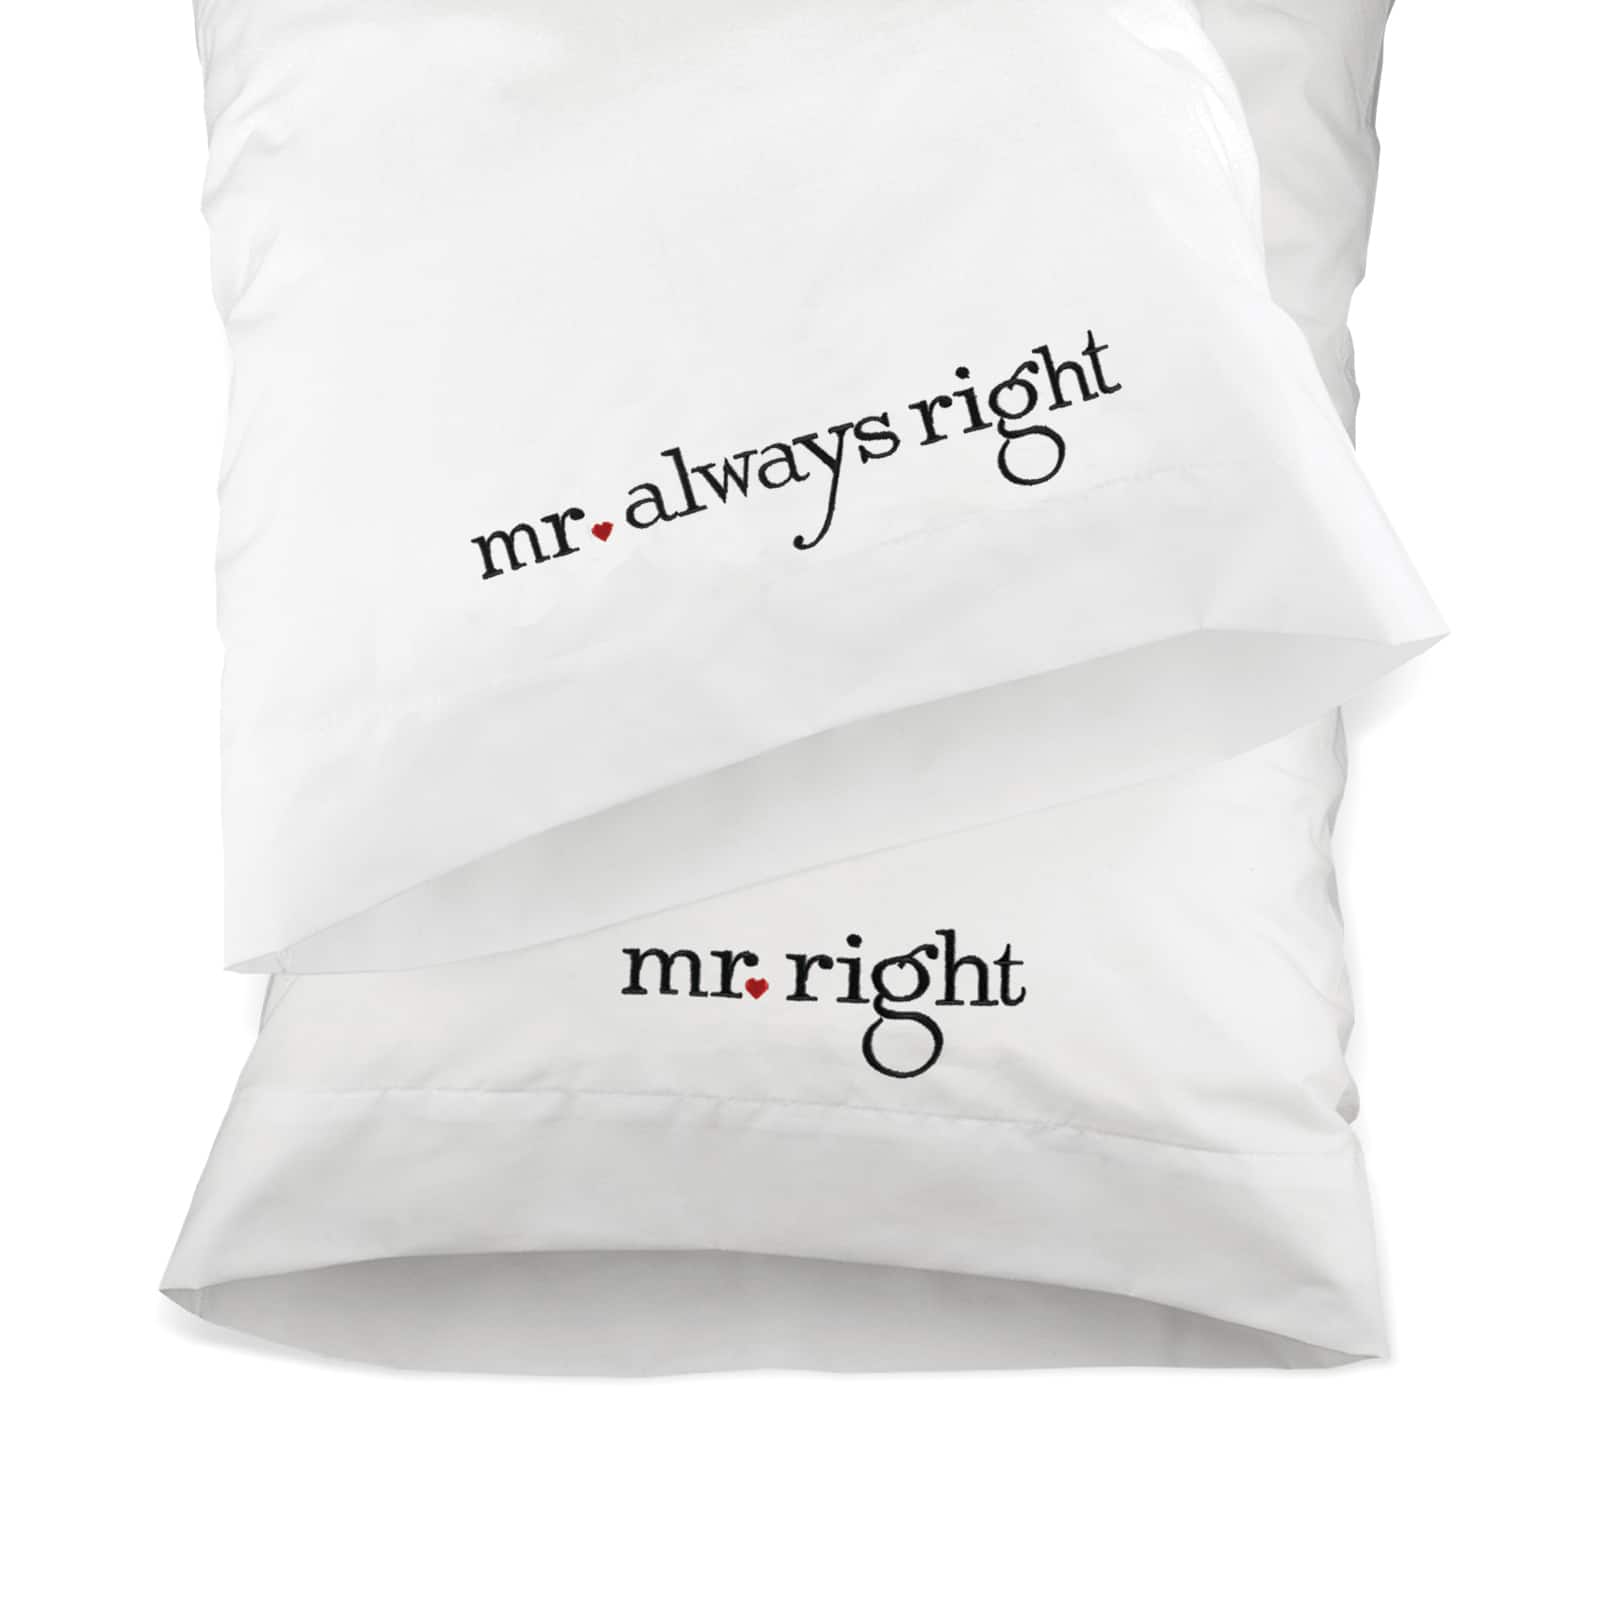 Hortense B. Hewitt Co. Pillowcase Set, Mr. &#x26; Mr, Right